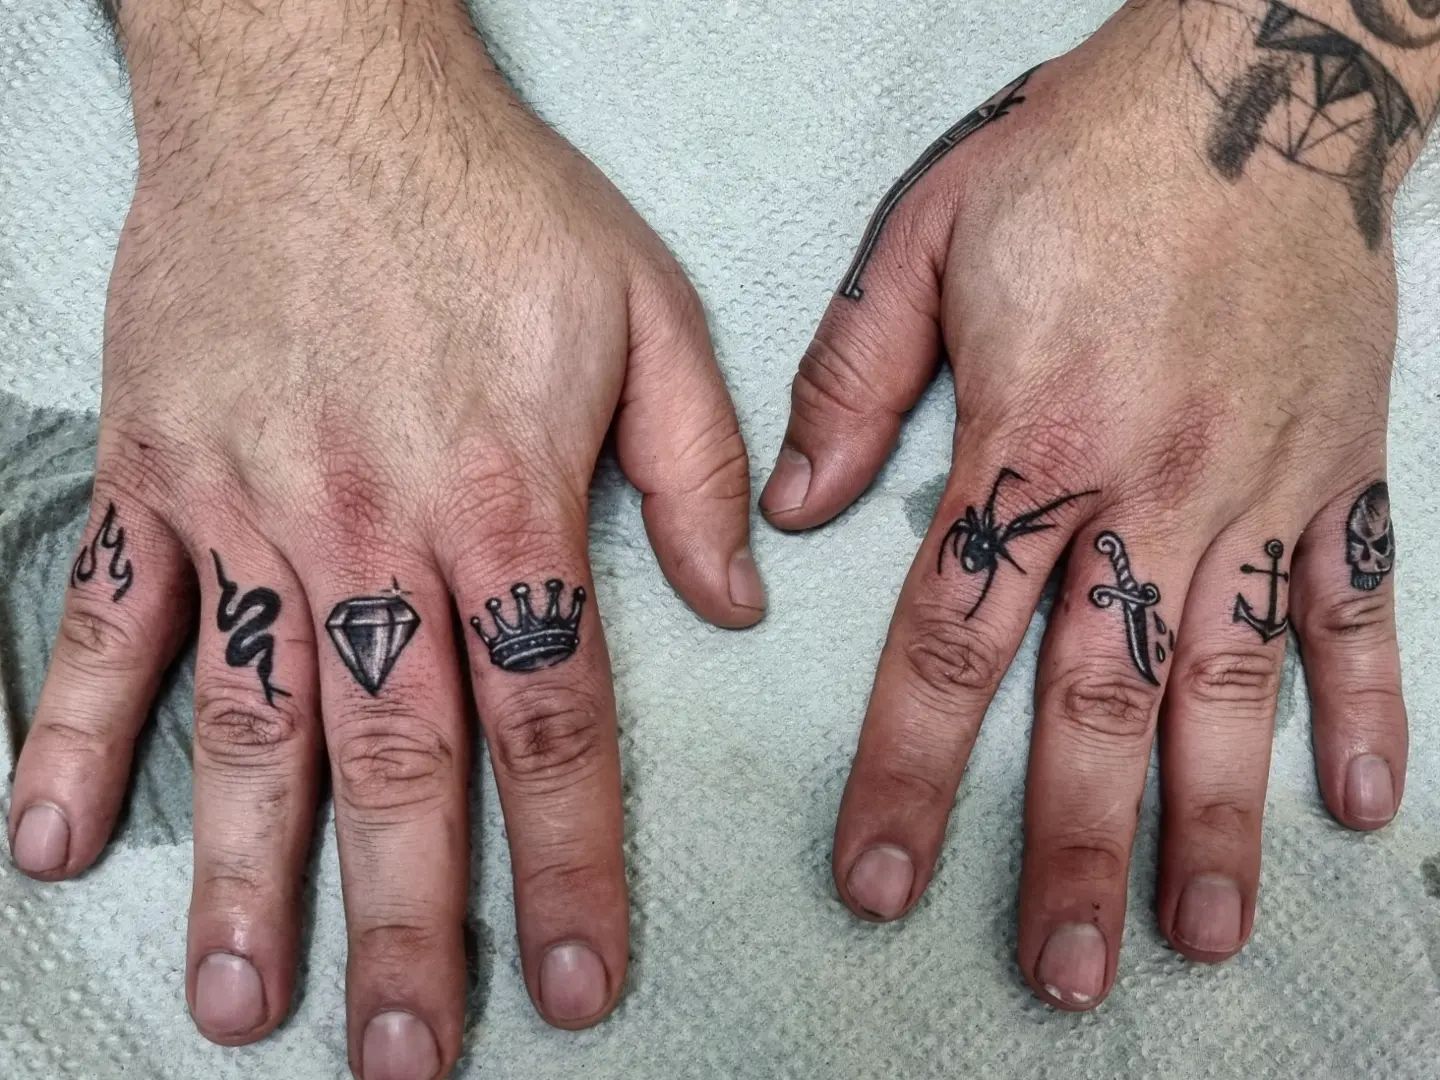 Finger tattoos design ideas for men, women and couples